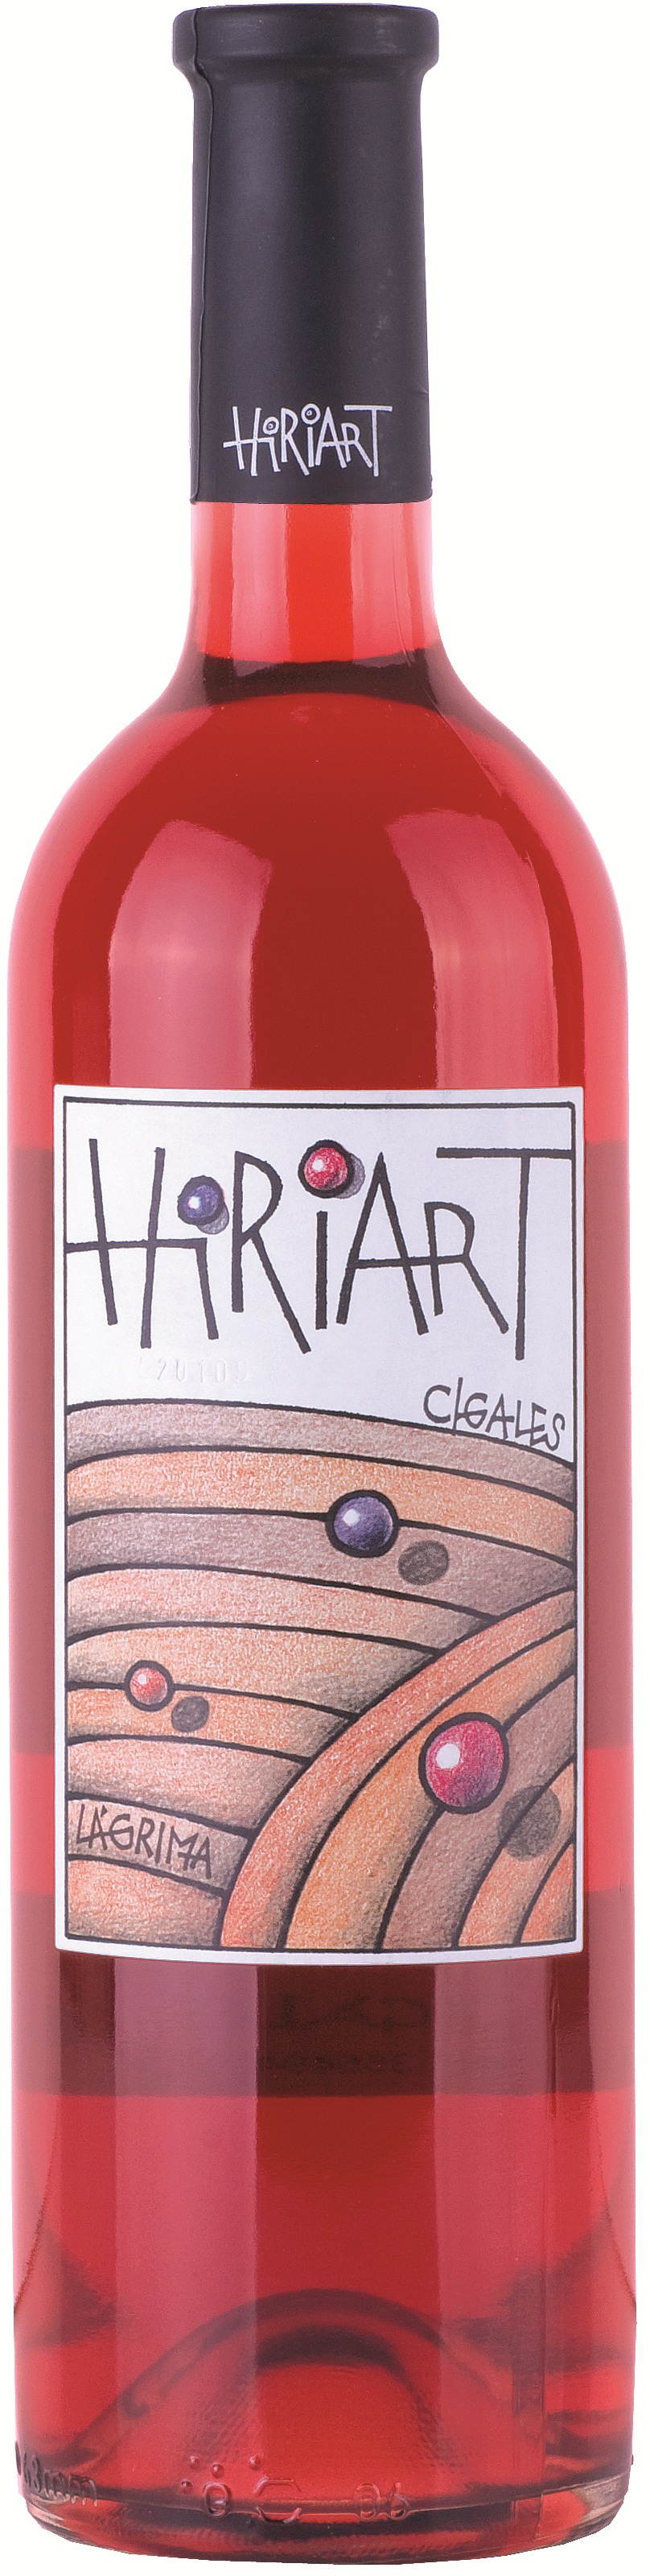 Imagen de la botella de Vino Hiriart Rosado Lágrima